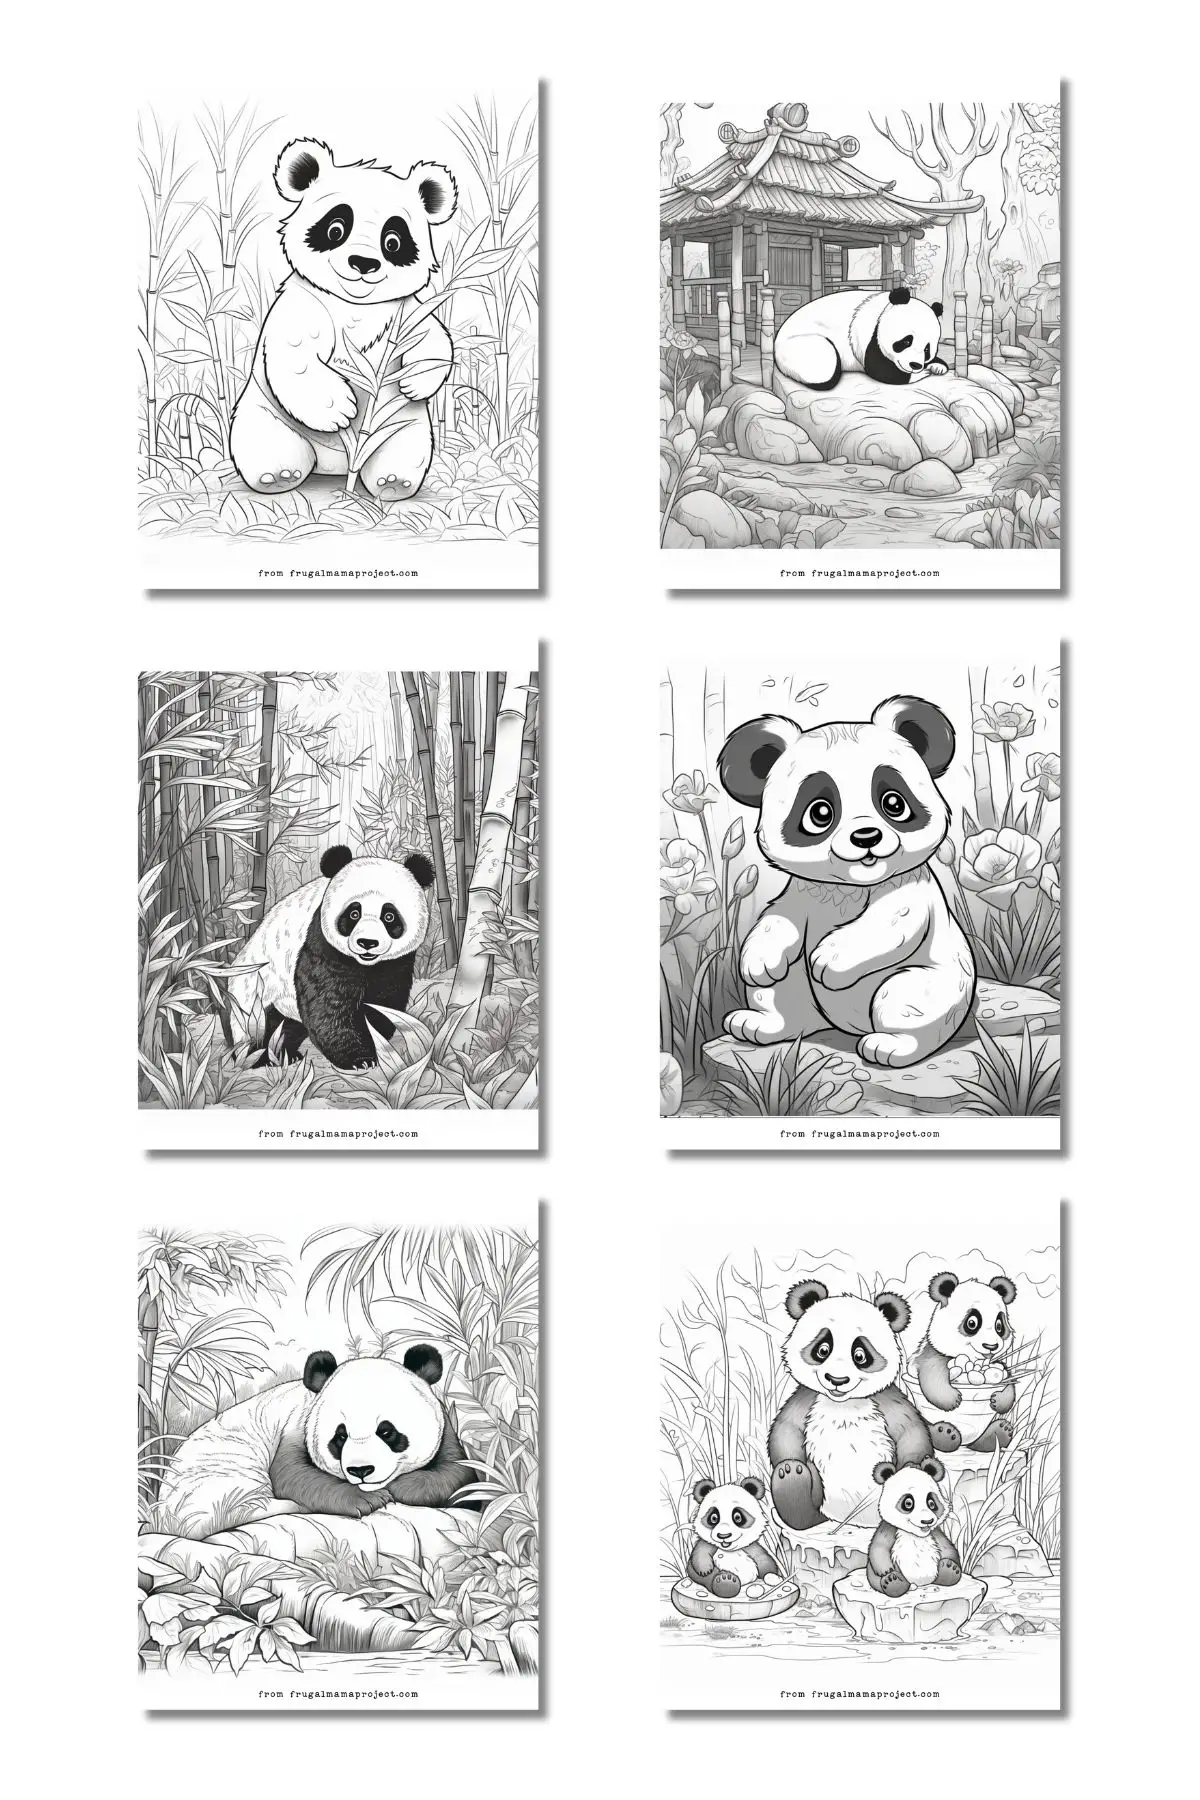 mockup of panda coloring pages